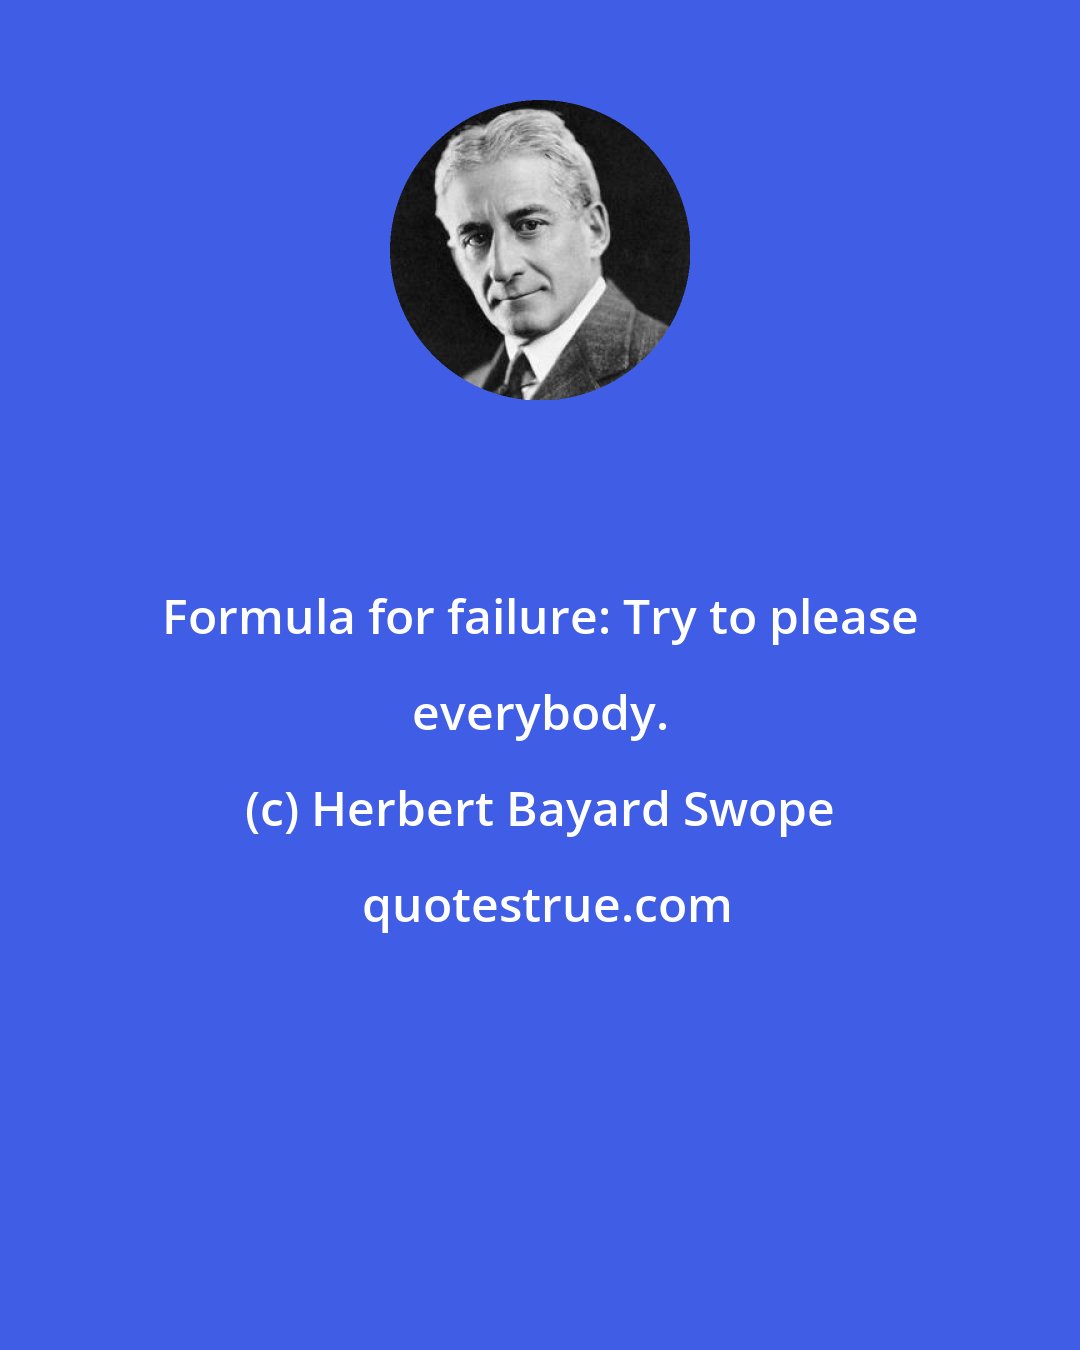 Herbert Bayard Swope: Formula for failure: Try to please everybody.